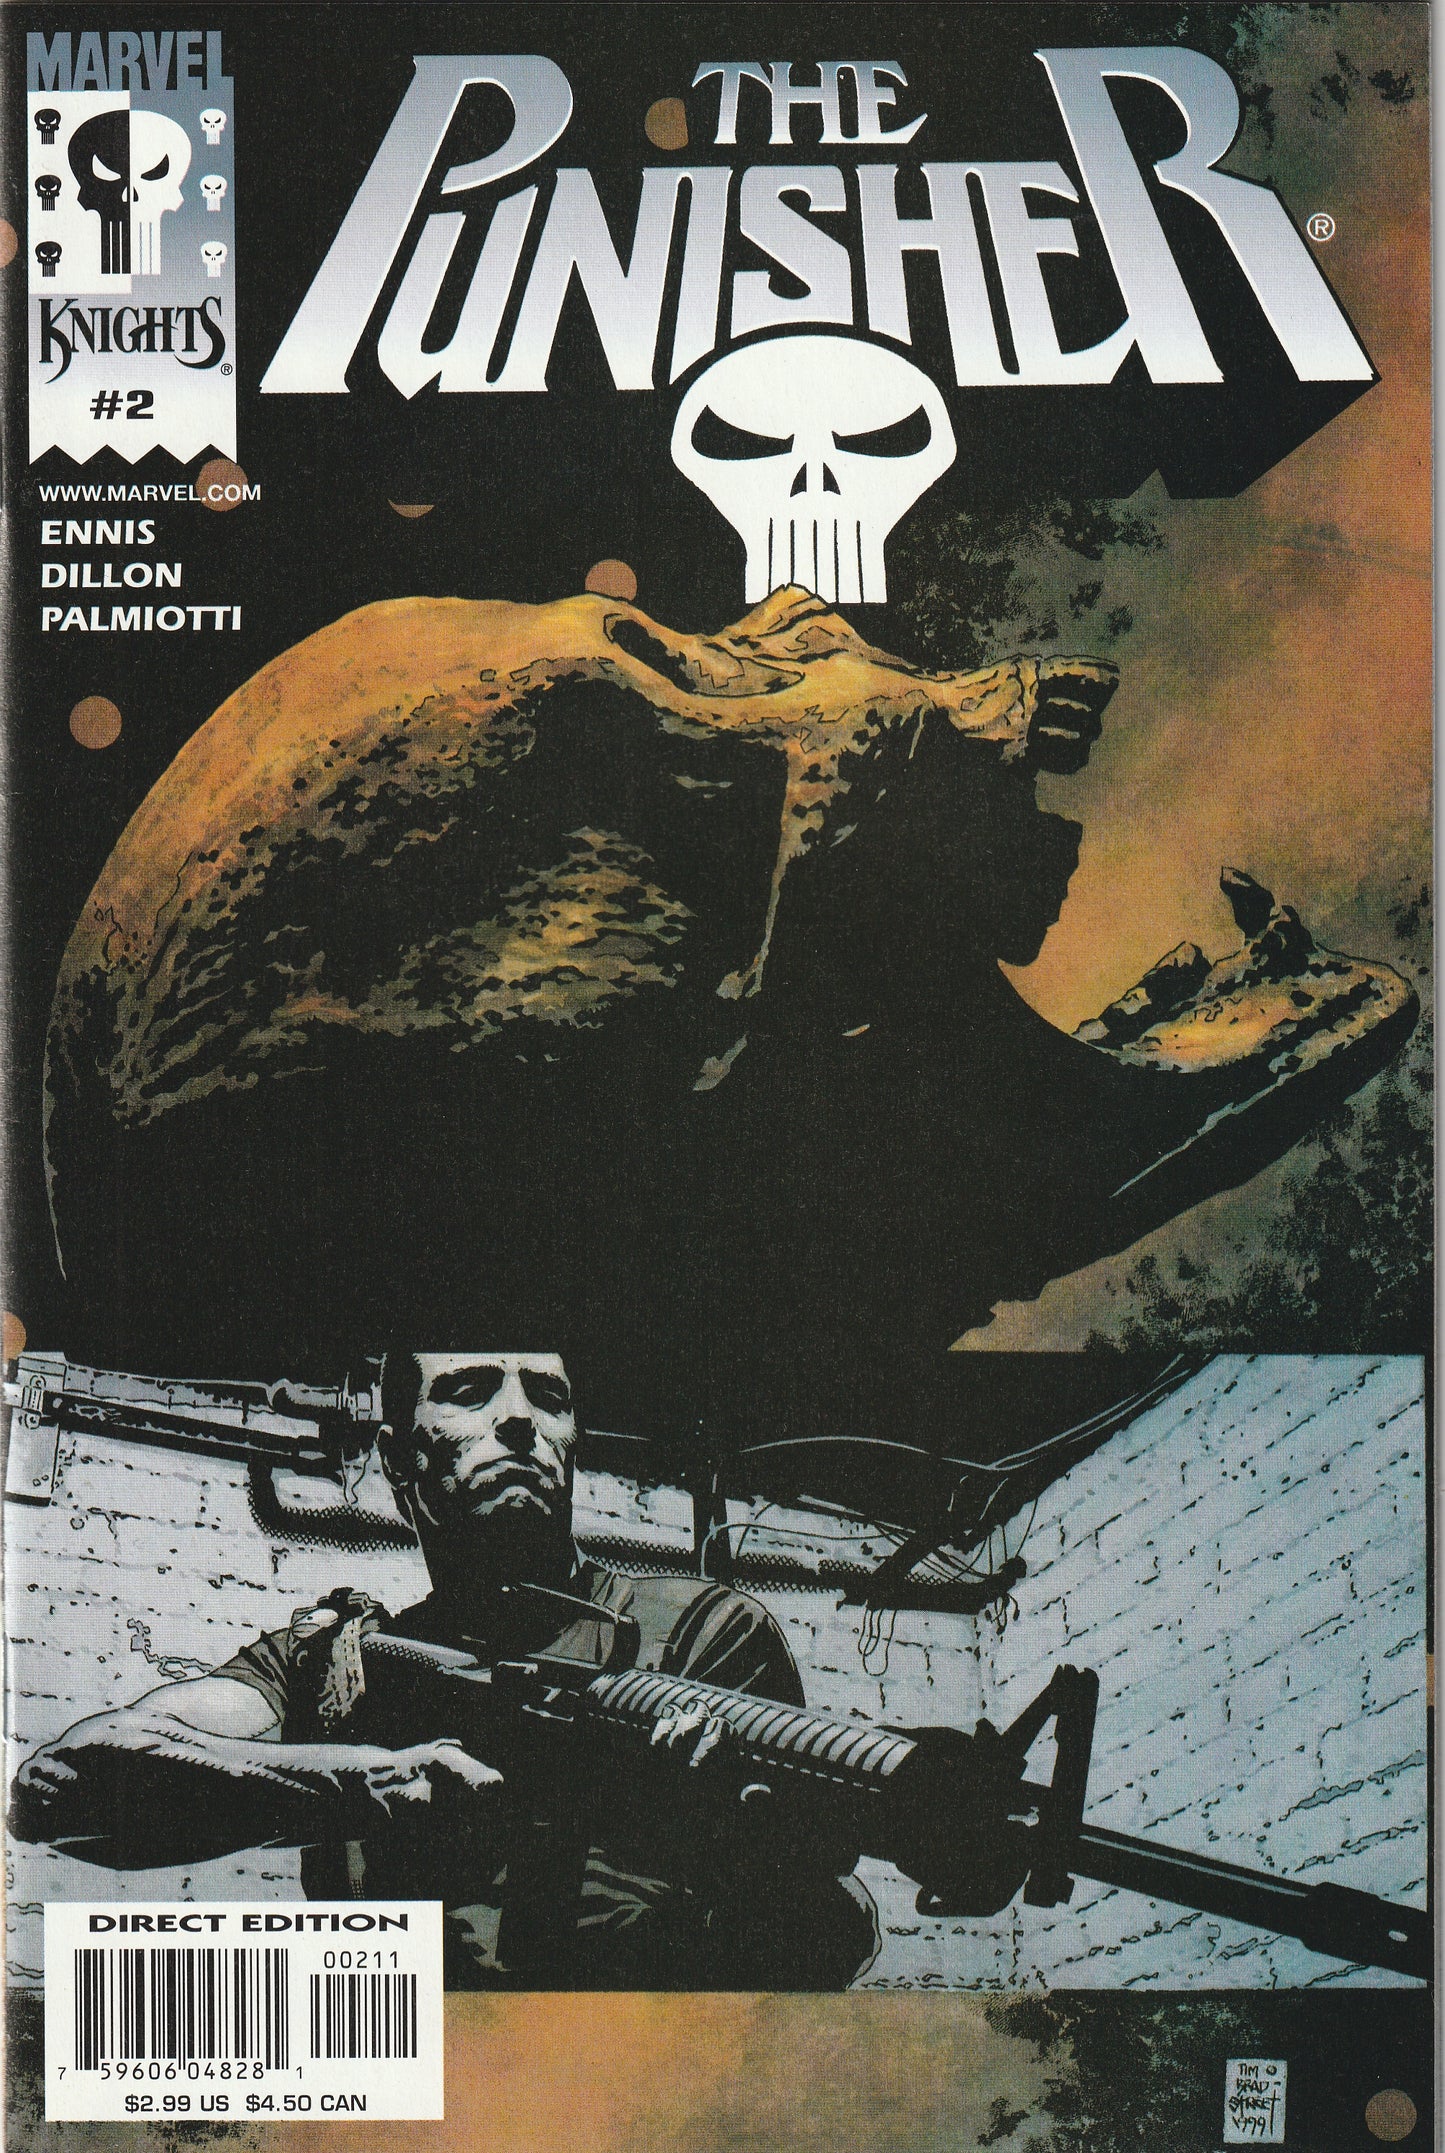 The Punisher #2 (Marvel Knights Vol 3, 2000) - Garth Ennis, Steve Dillon, Jimmy Palmiotti